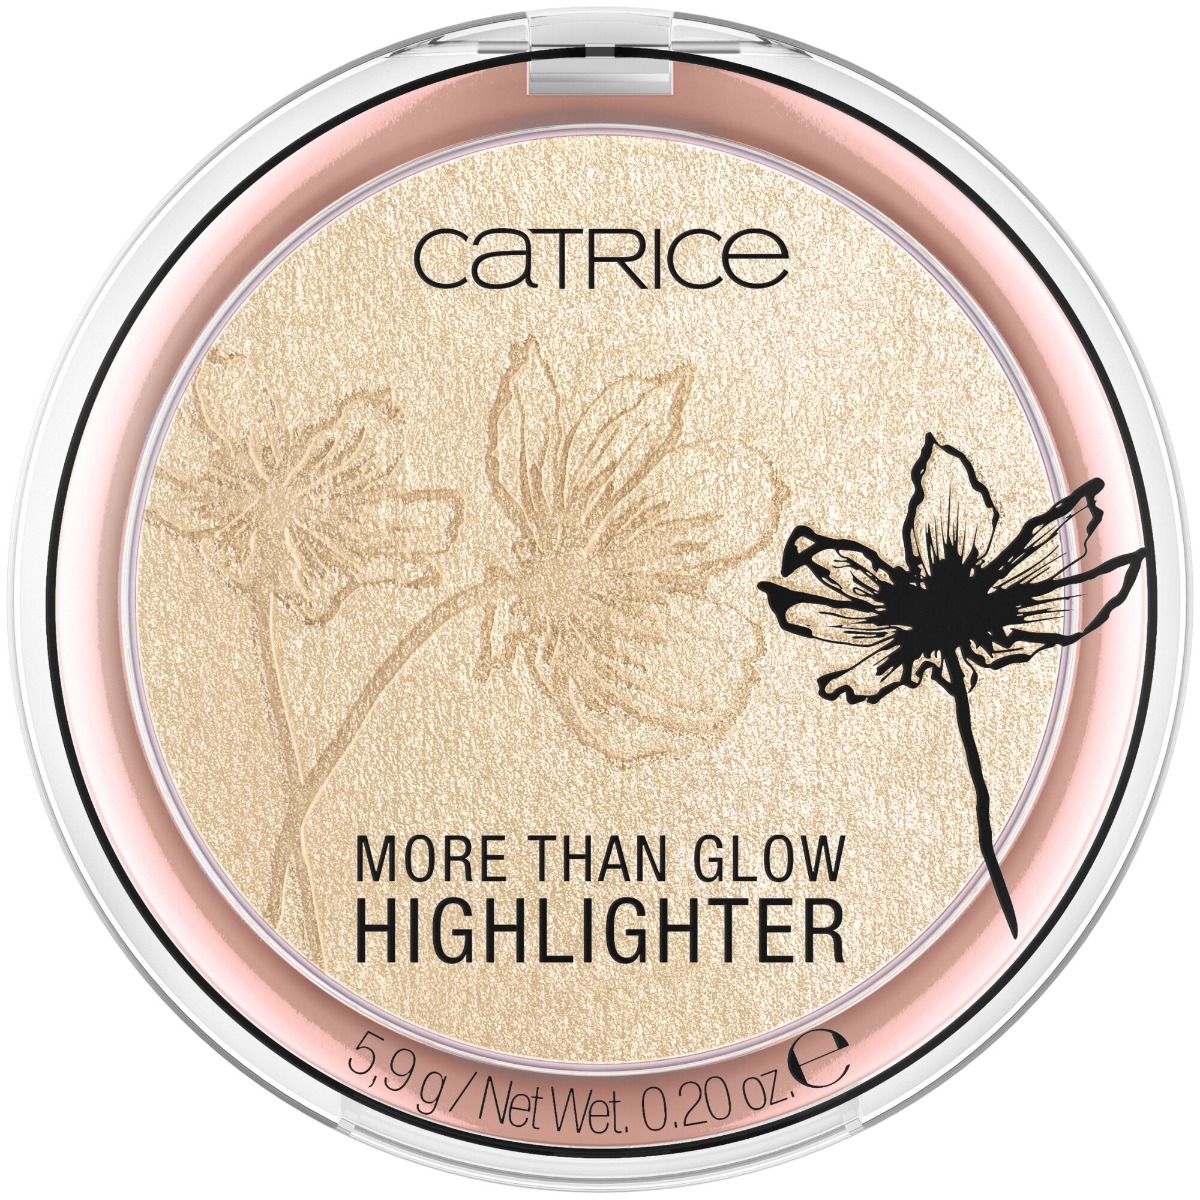 Iluminator More Than Glow Highlighter 030 - Beyond Golden Glow, 5.9g, Catrice